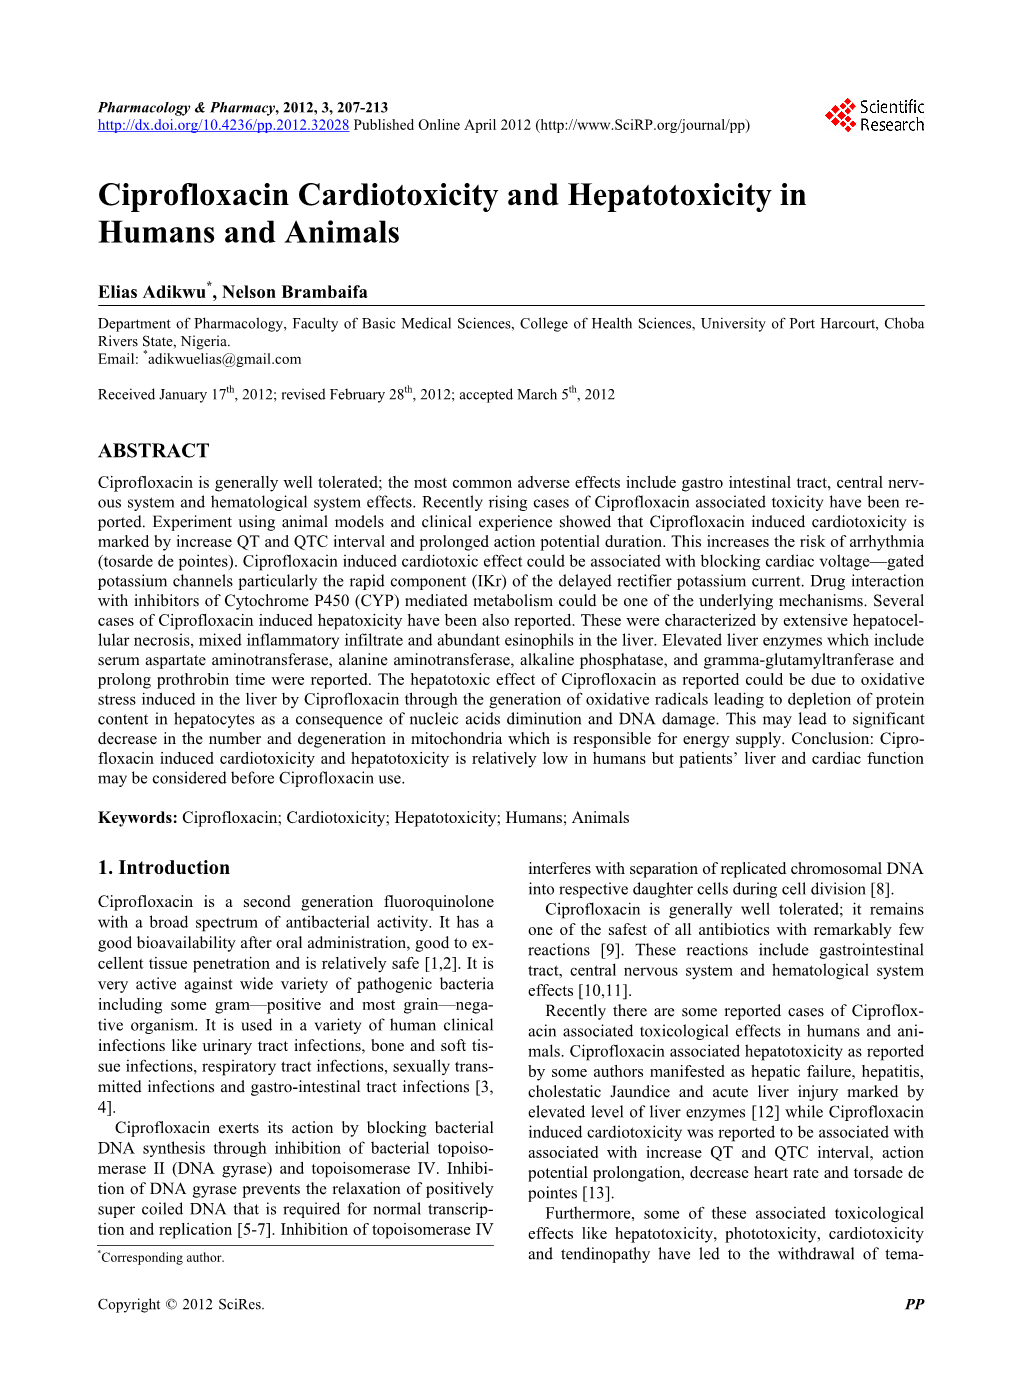 Ciprofloxacin; Cardiotoxicity; Hepatotoxicity; Humans; Animals